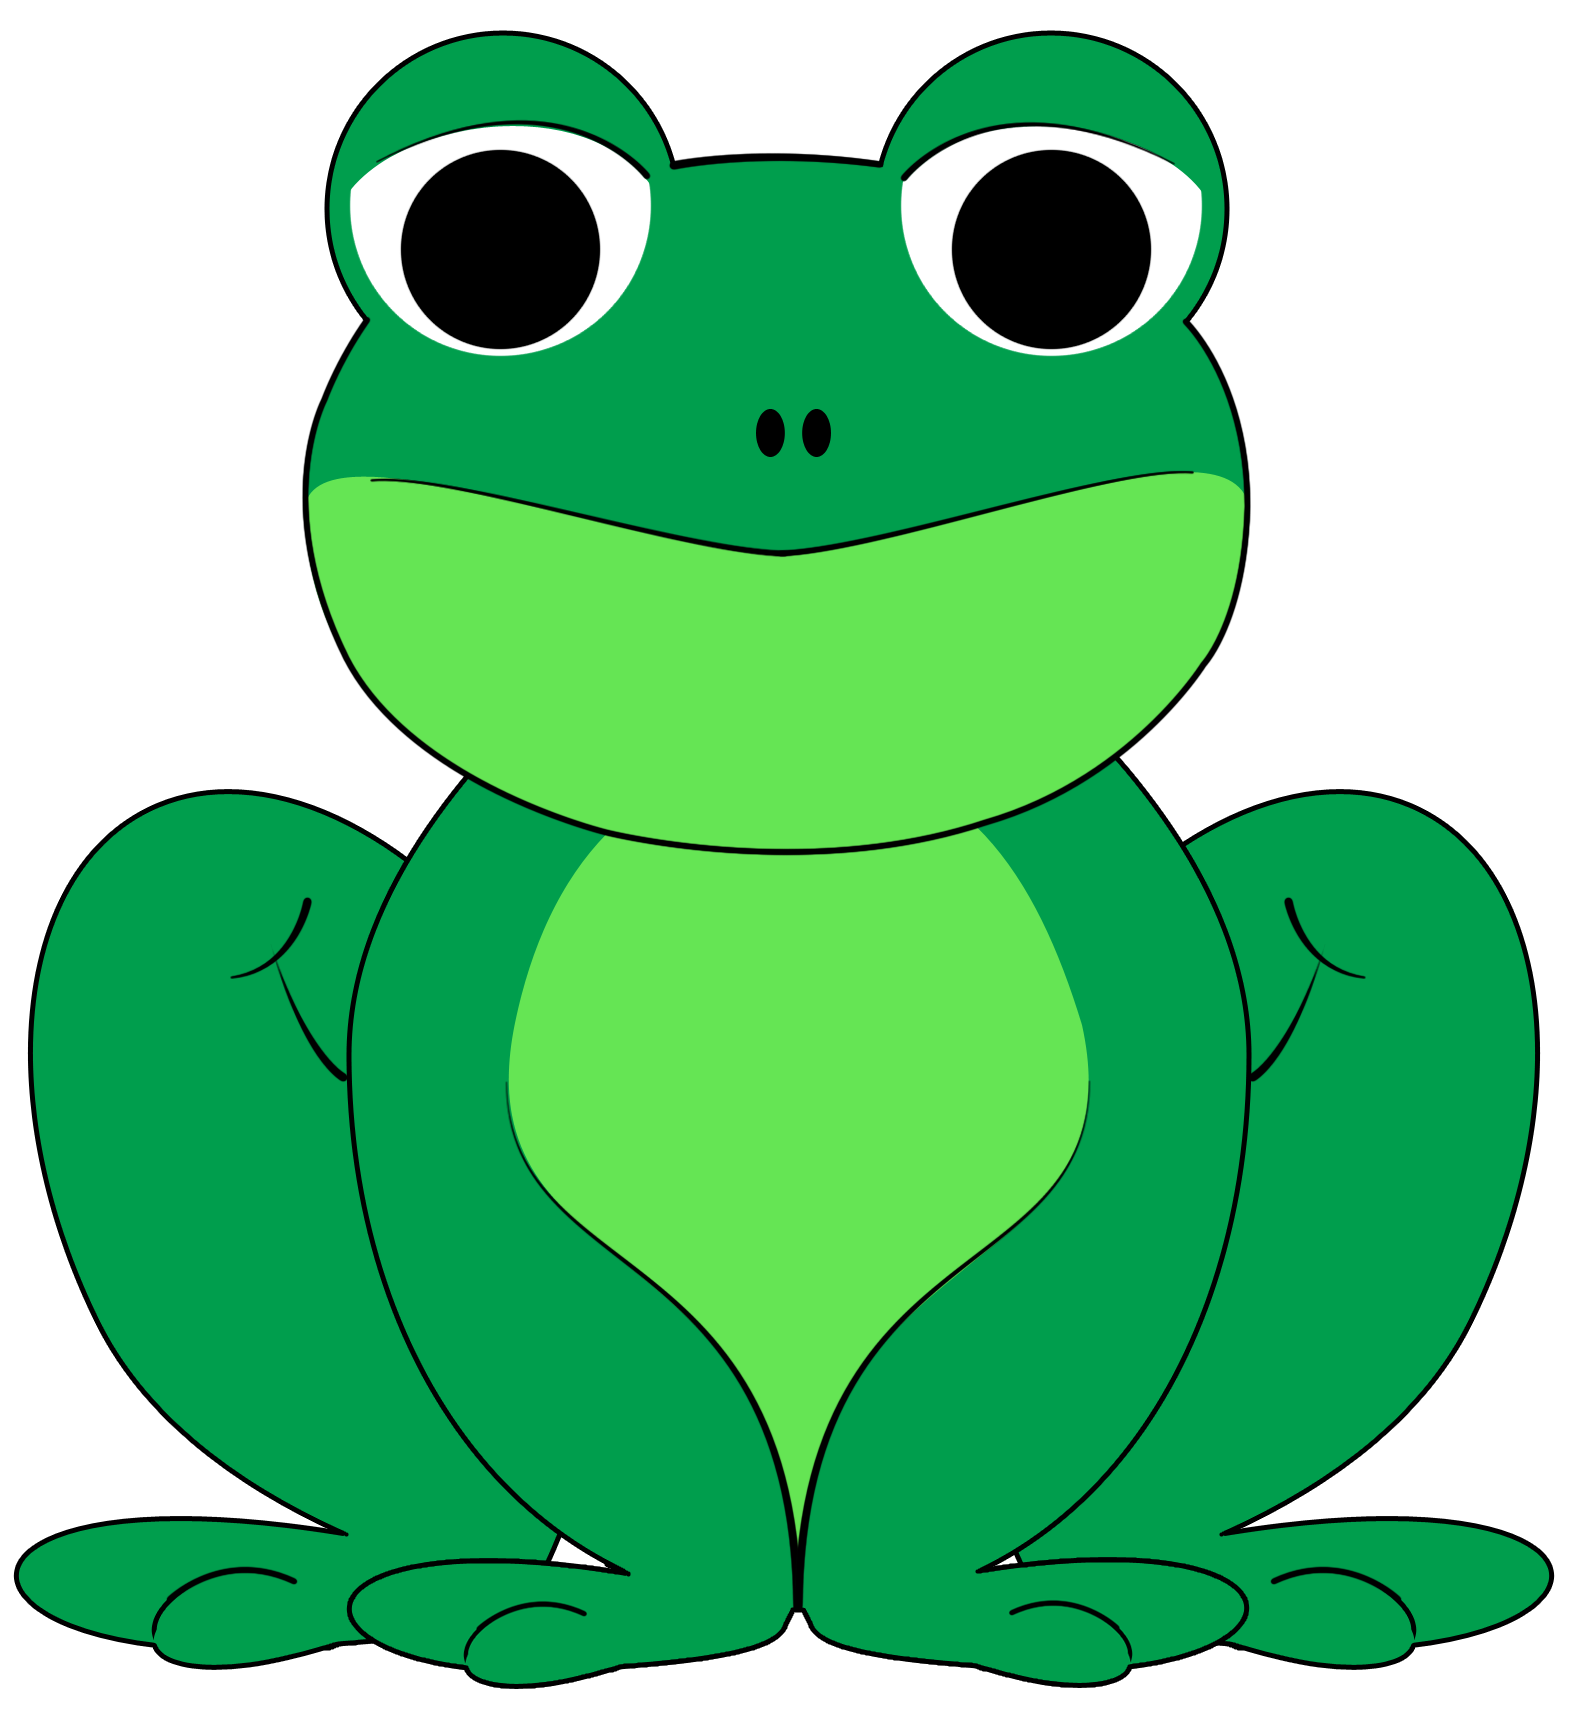 Frog clip art free vector image 5